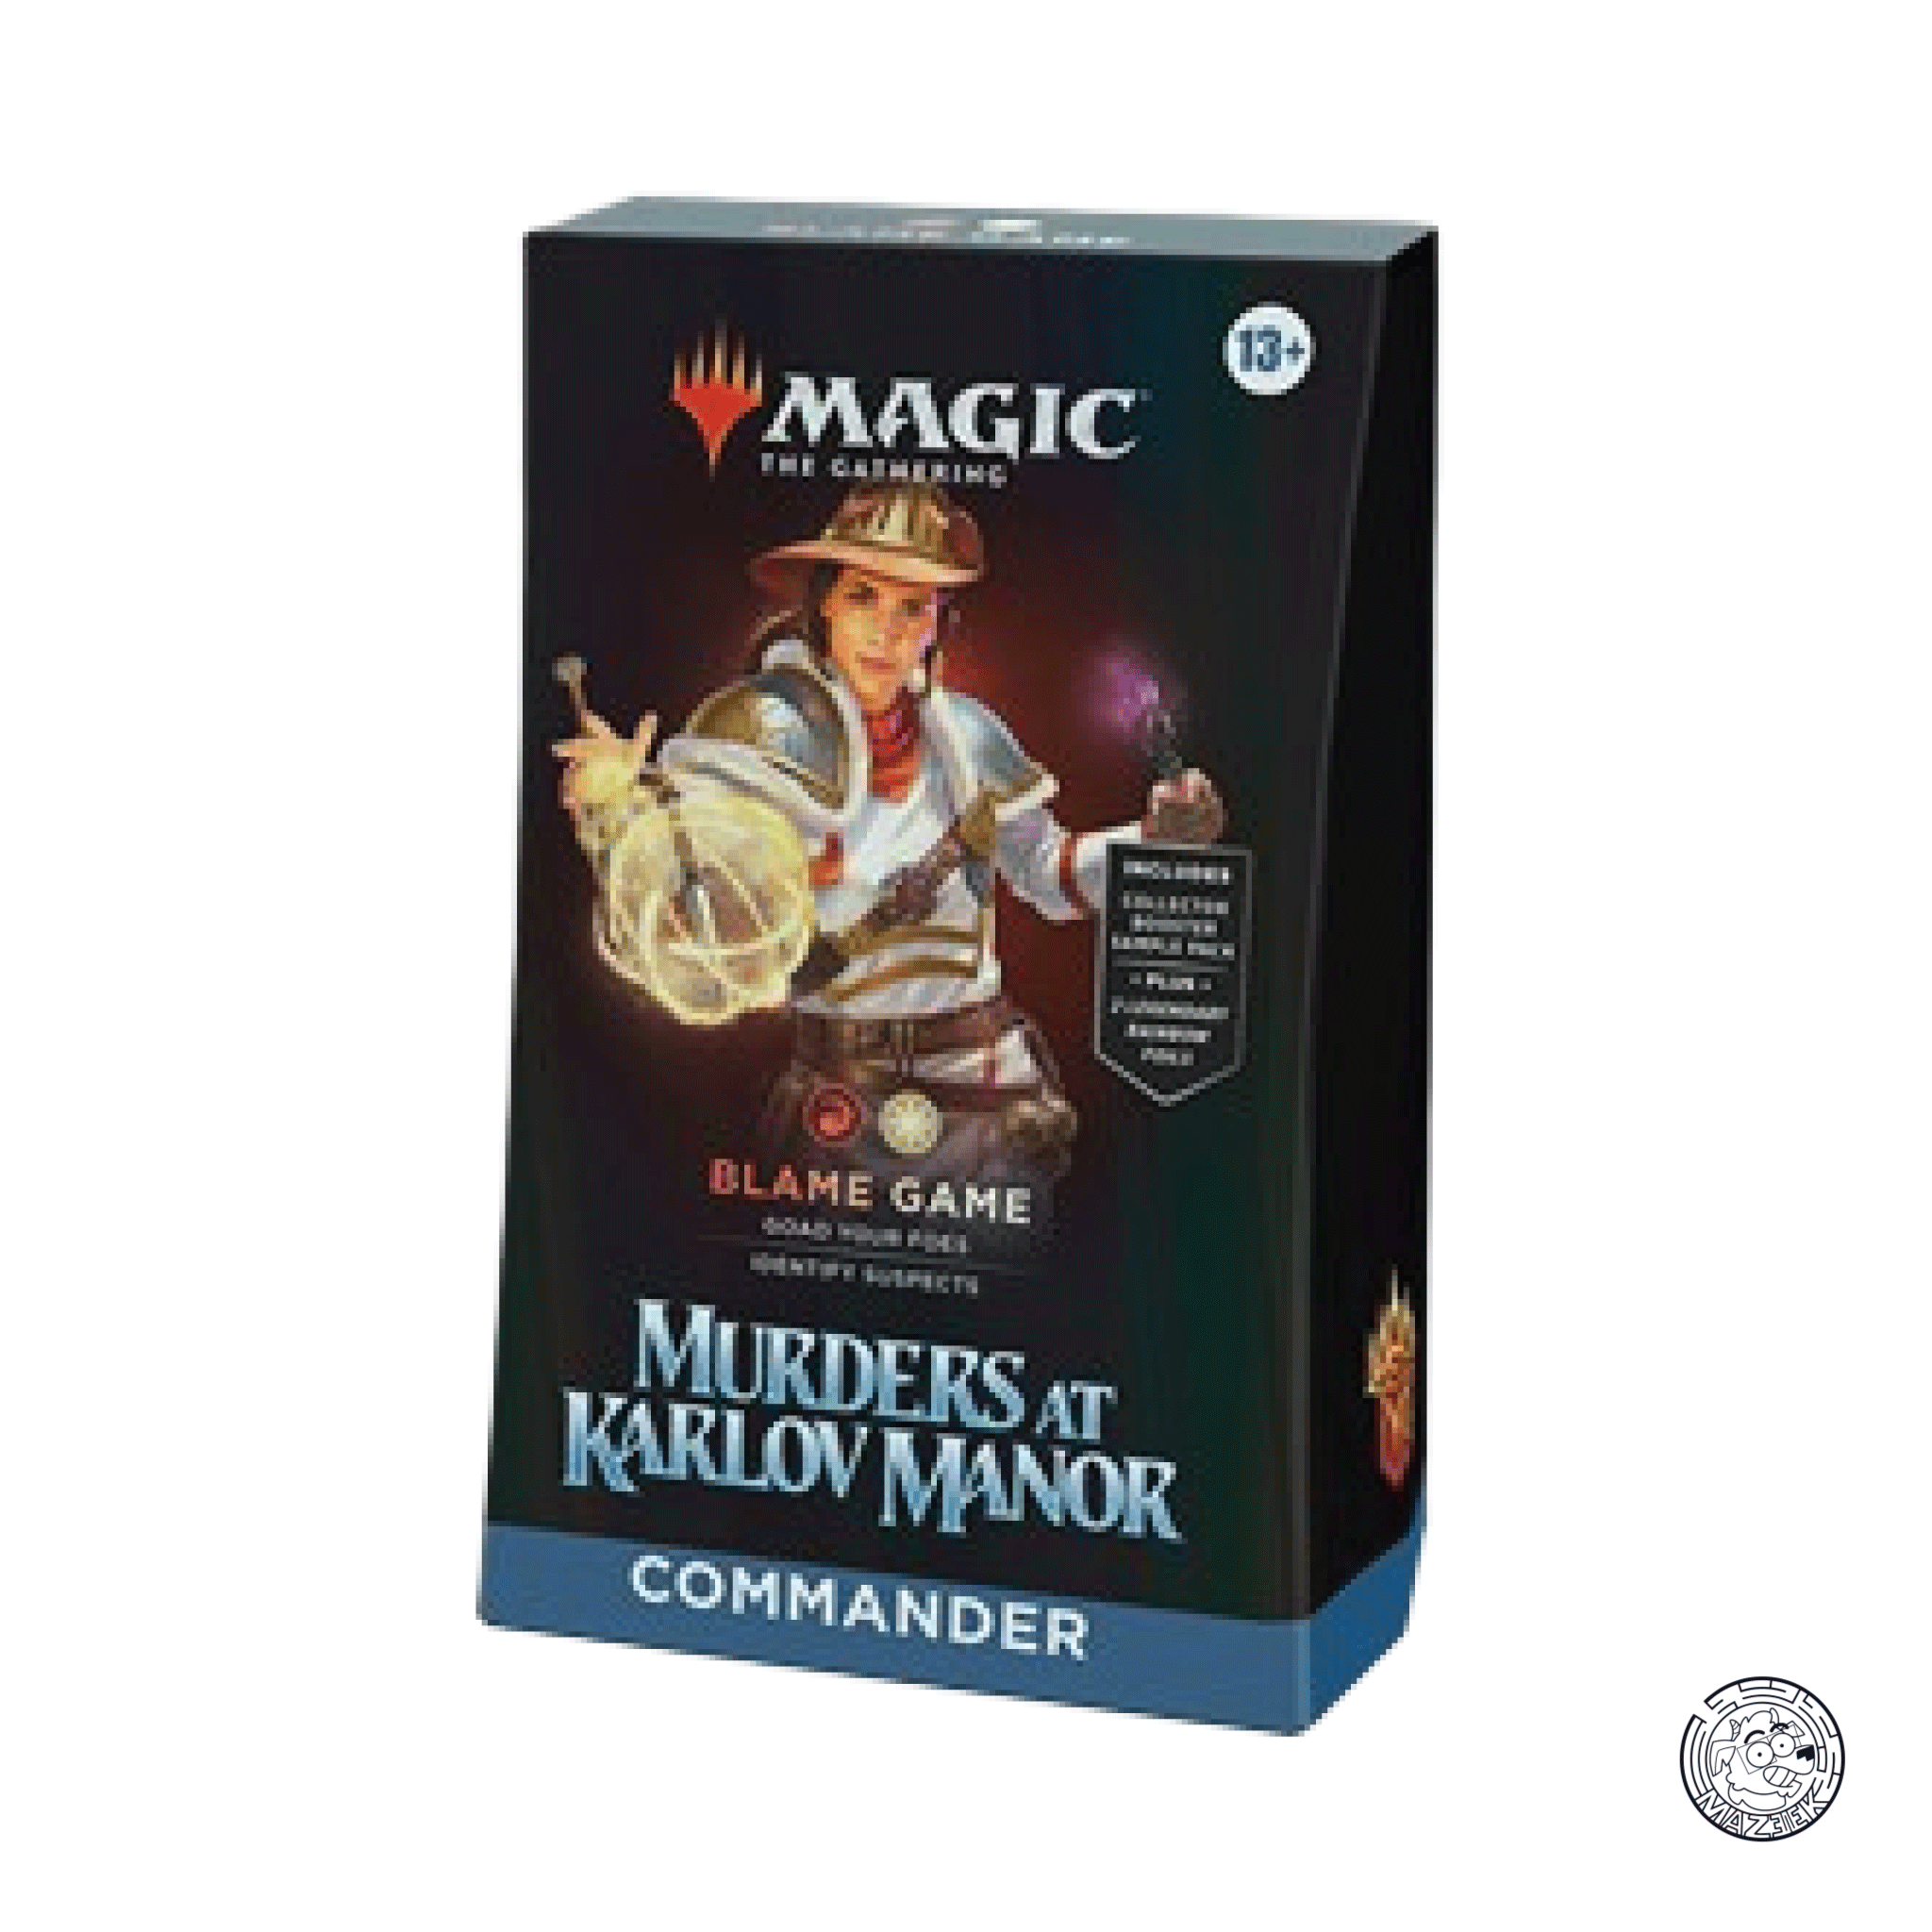 Magic the Gathering - Commander Deck: Murders at Karlov Manor "Blame Game" ENG